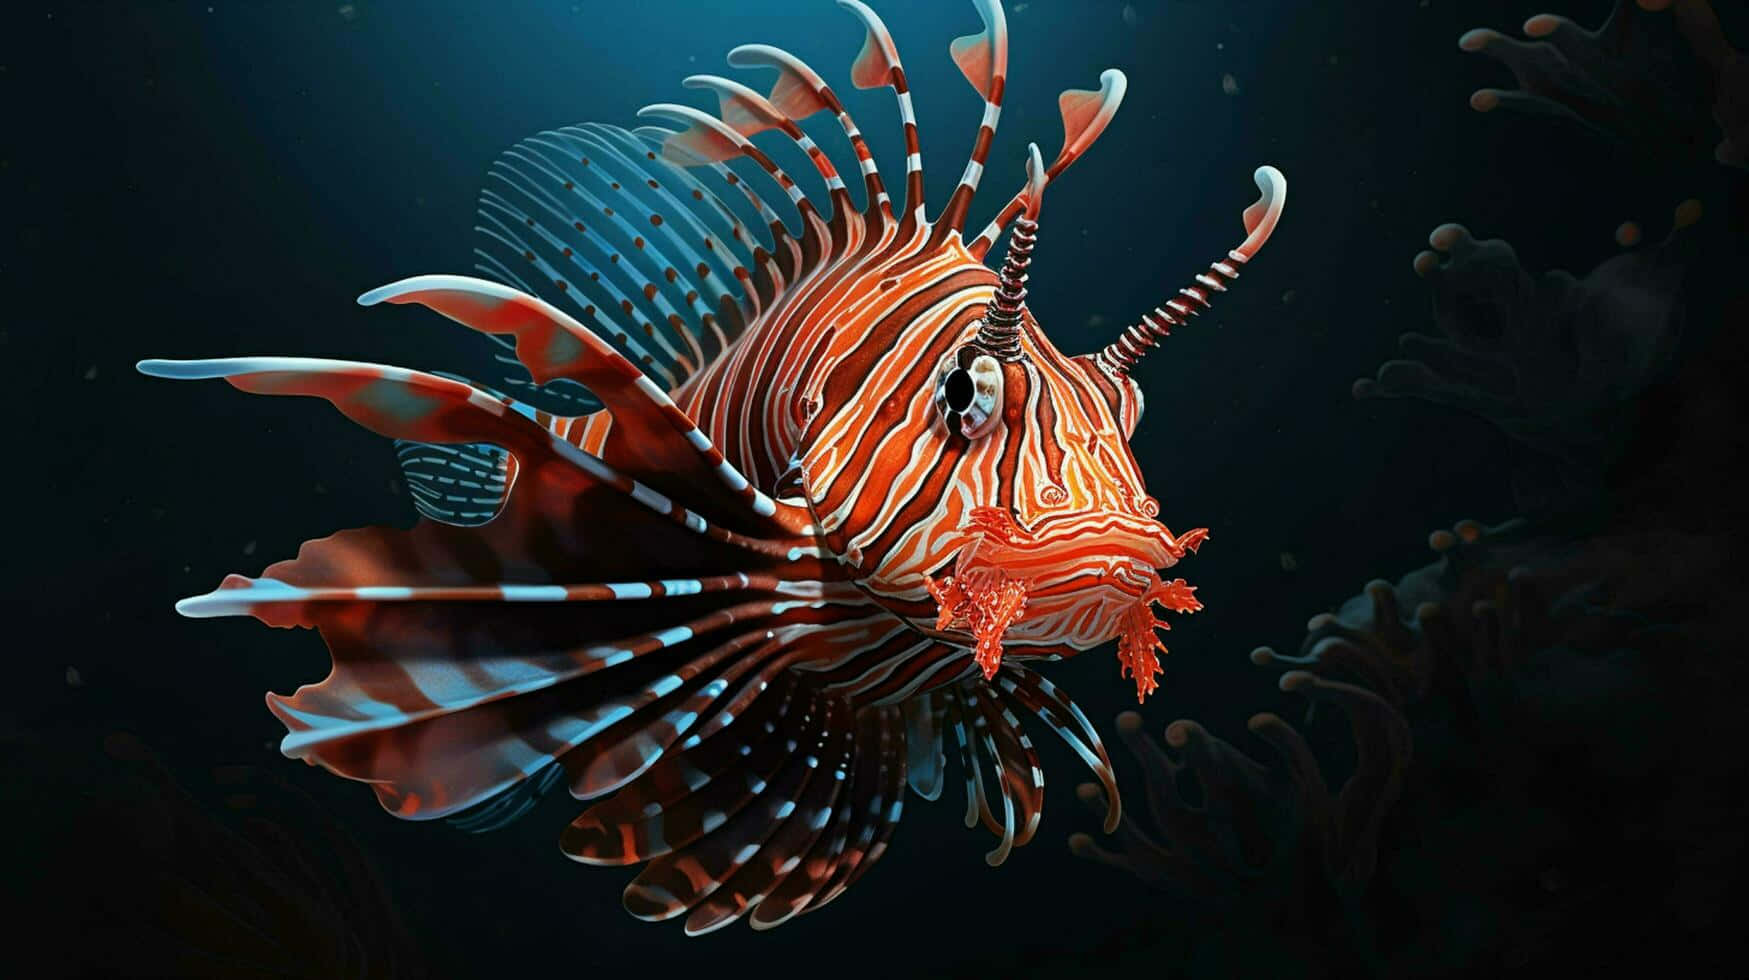 Red Lionfish Underwater Reflection Wallpaper